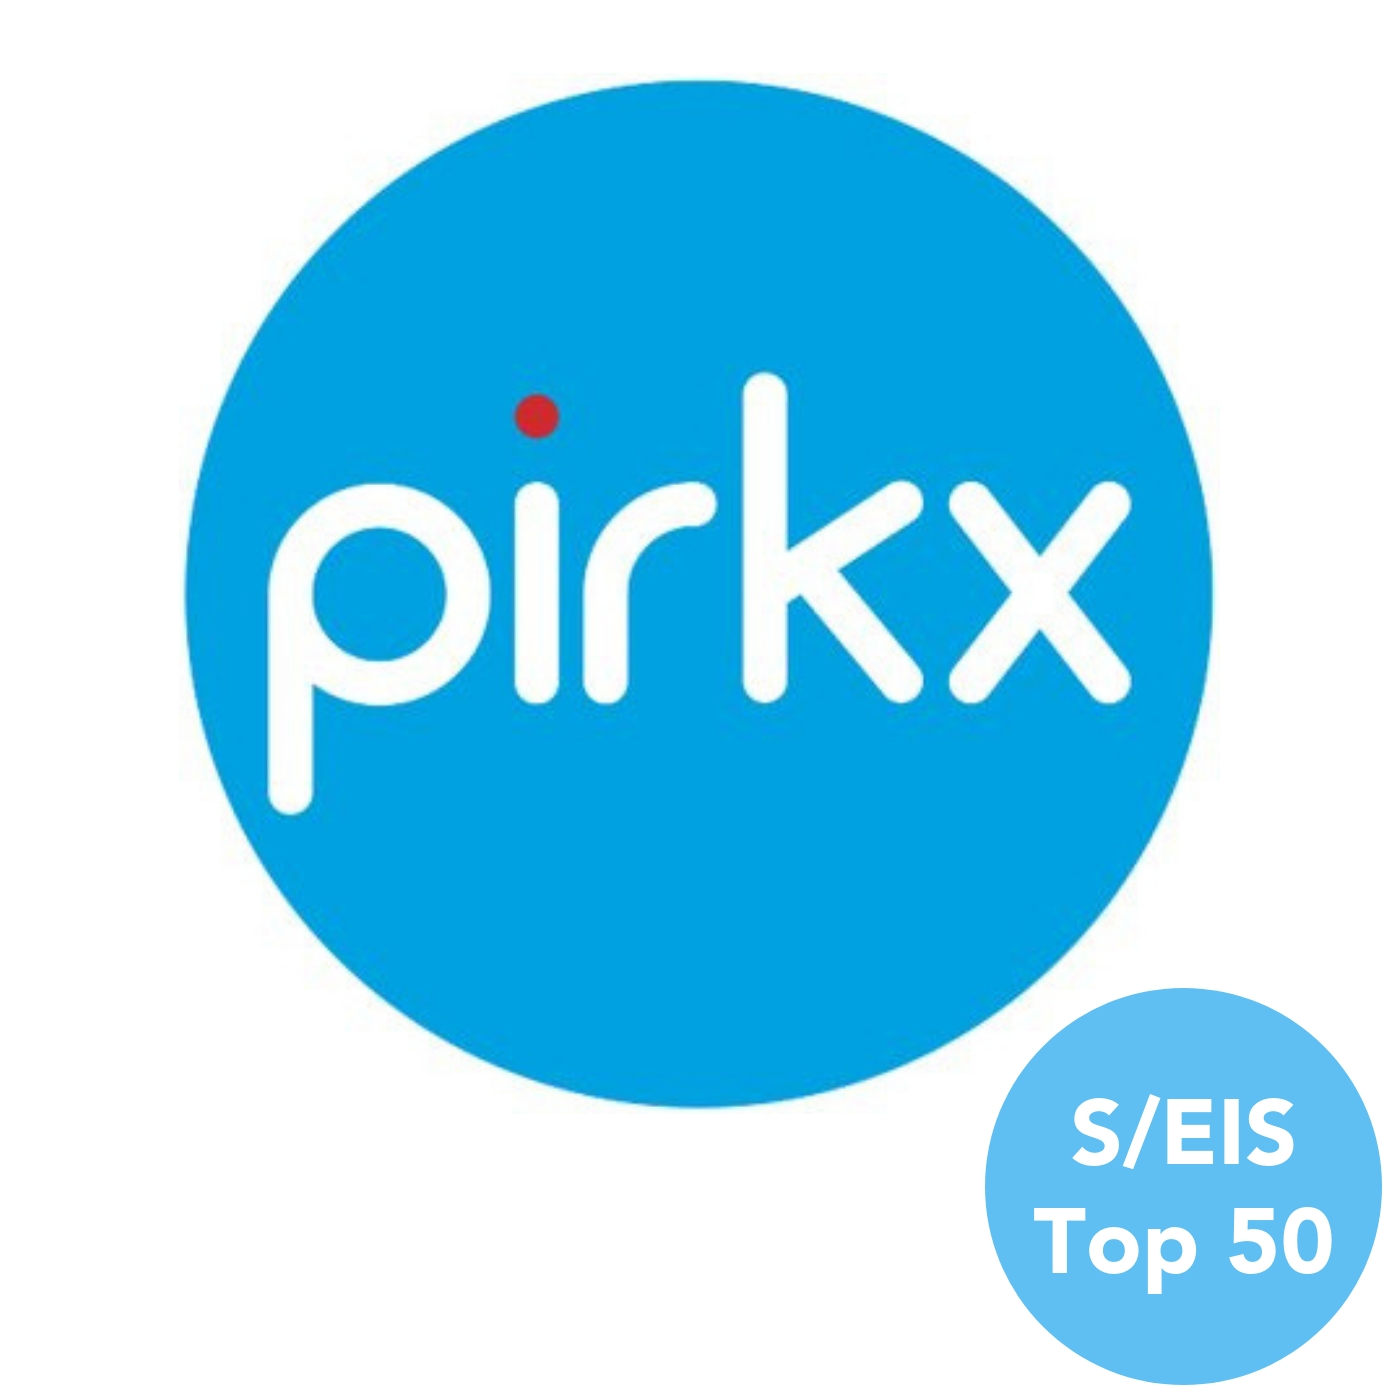 Pirkx | S/EIS Top 50